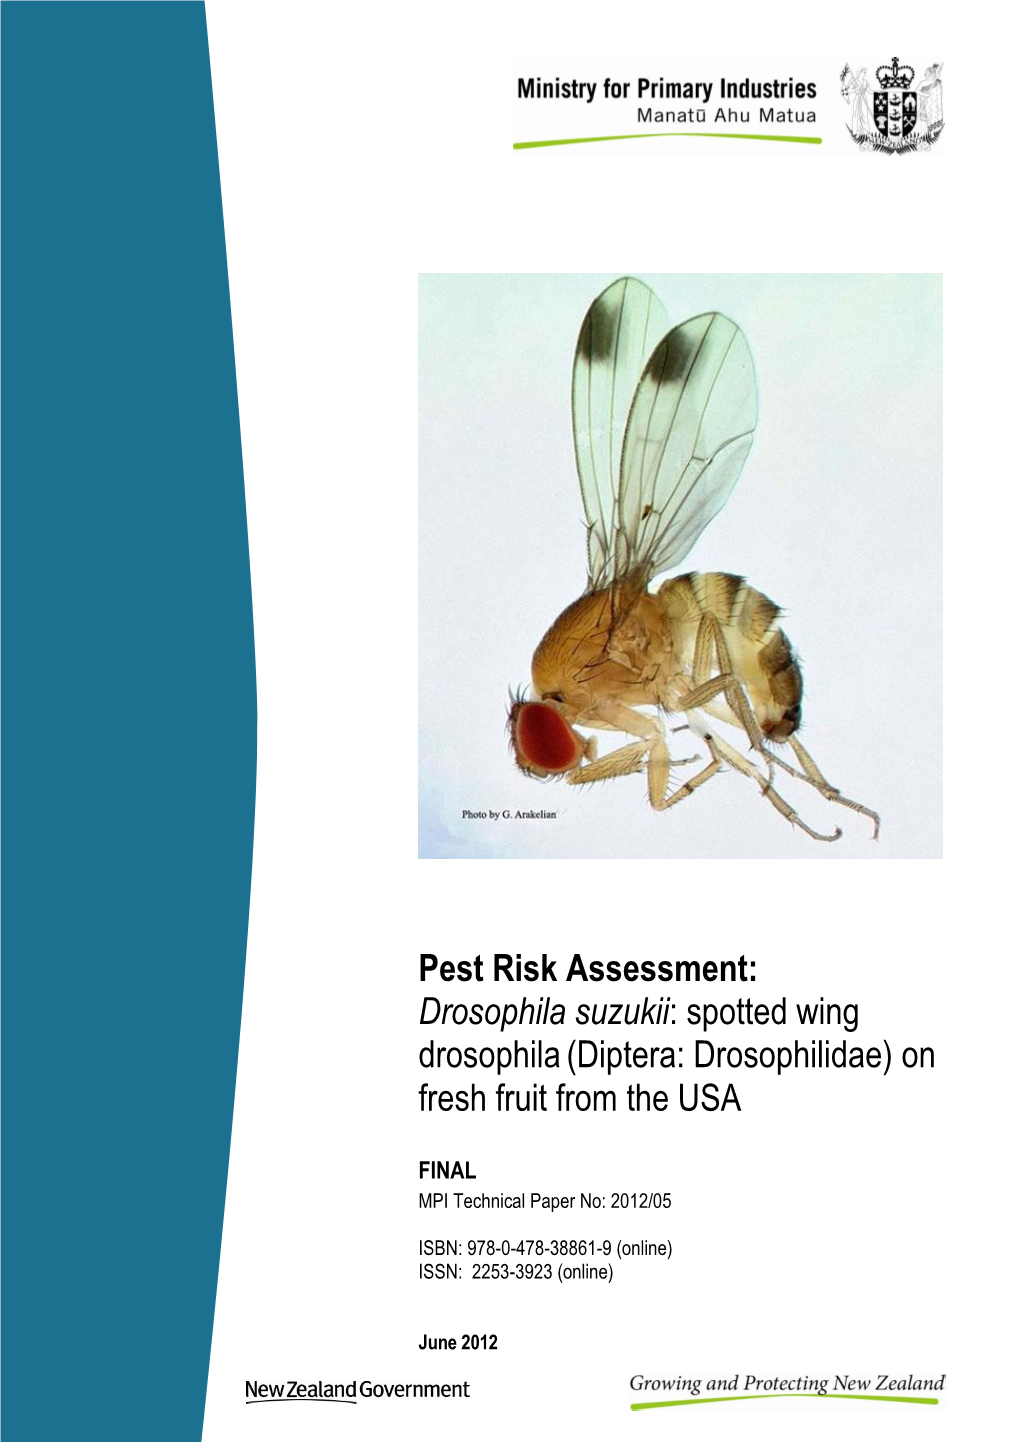 Pest Risk Assessment: Drosophila Suzukii: Spotted Wing Drosophila (Diptera: Drosophilidae) on Fresh Fruit from the USA